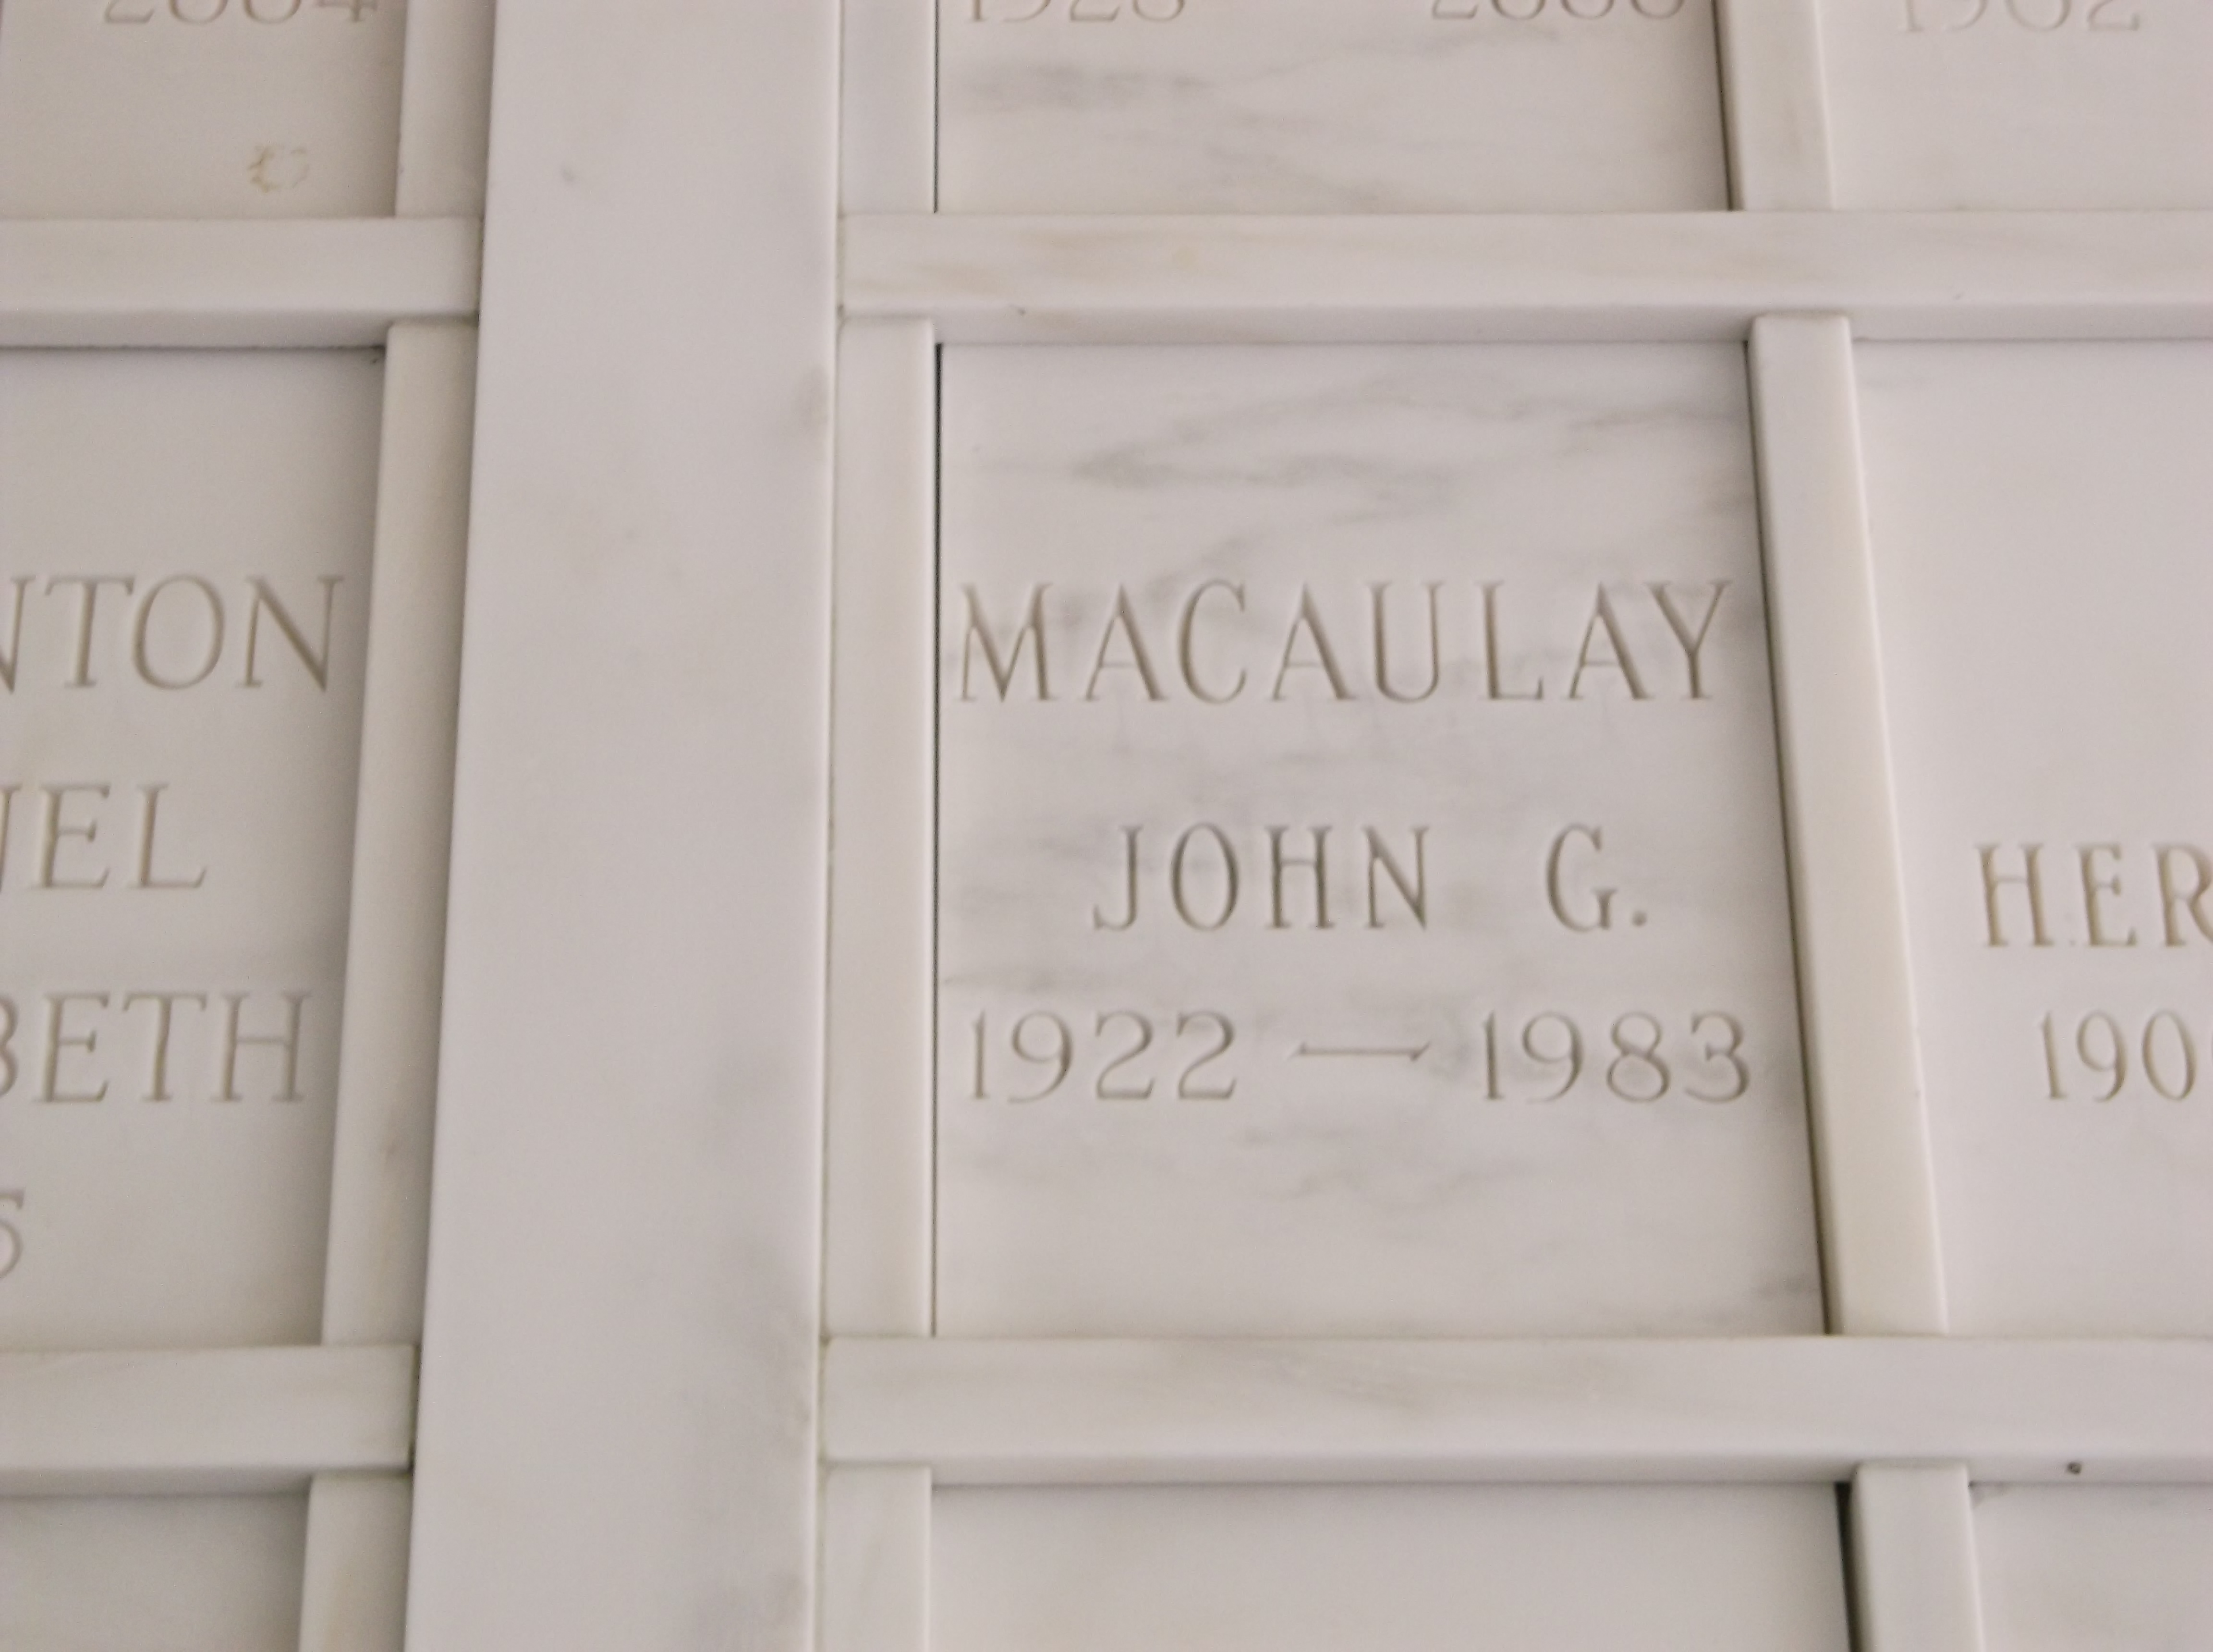 John G Macaulay